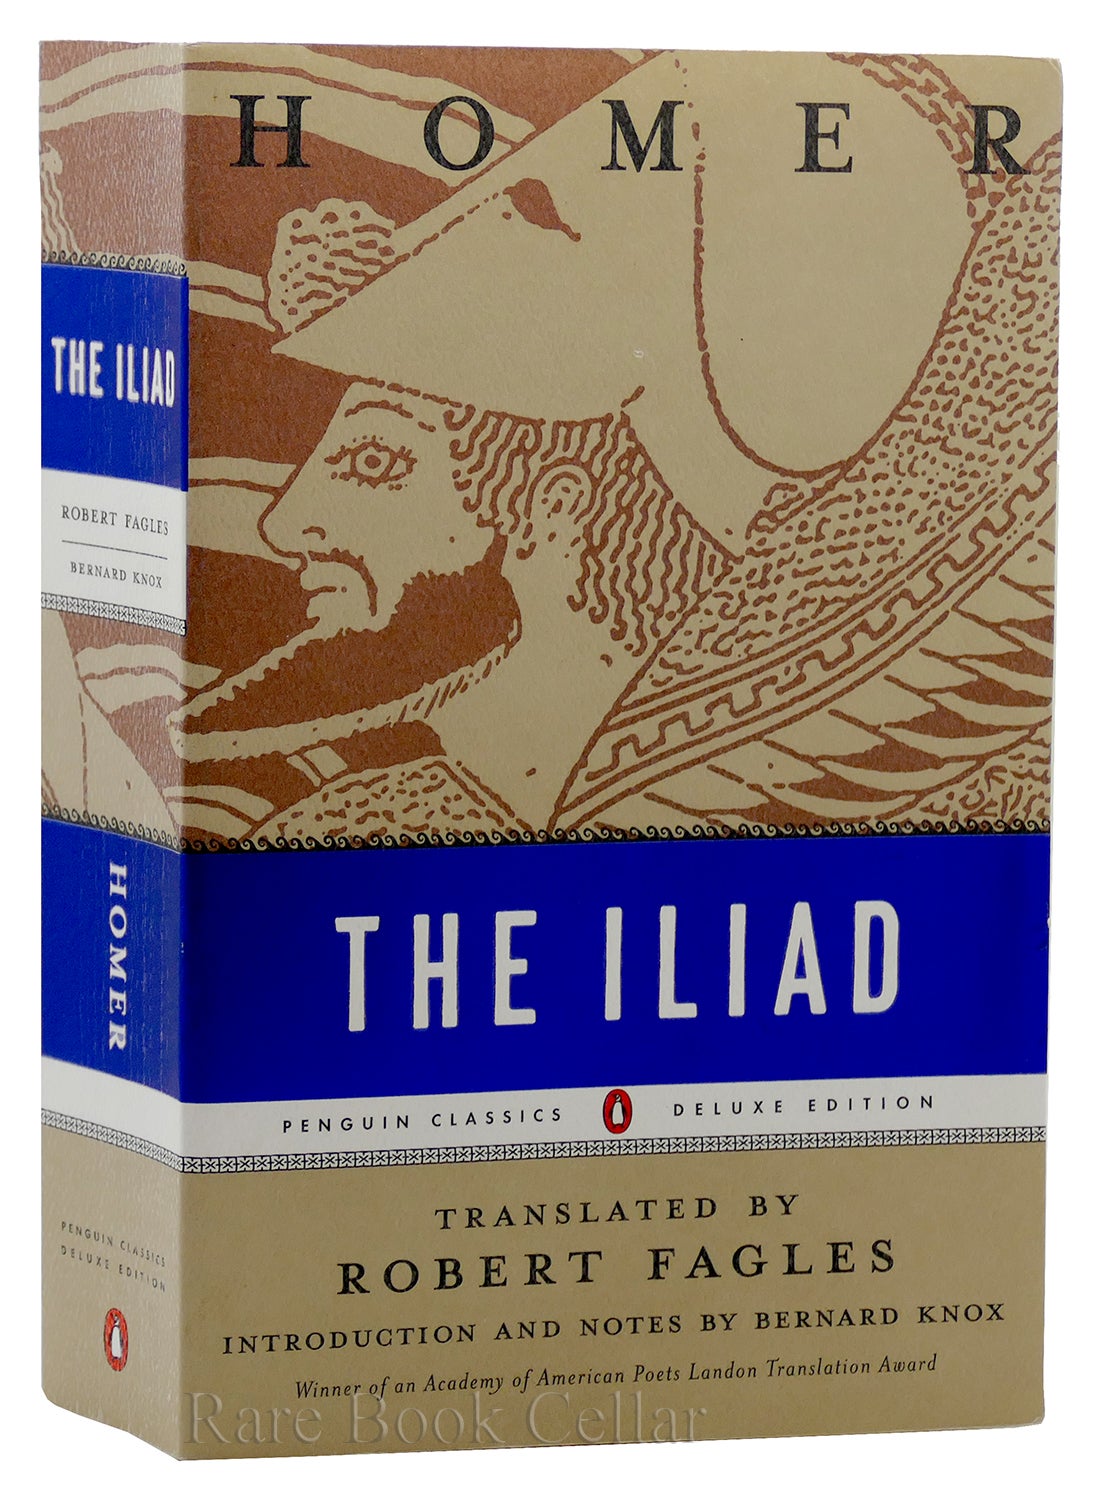 THE ILIAD | Robert Fagles Homer | BOMC